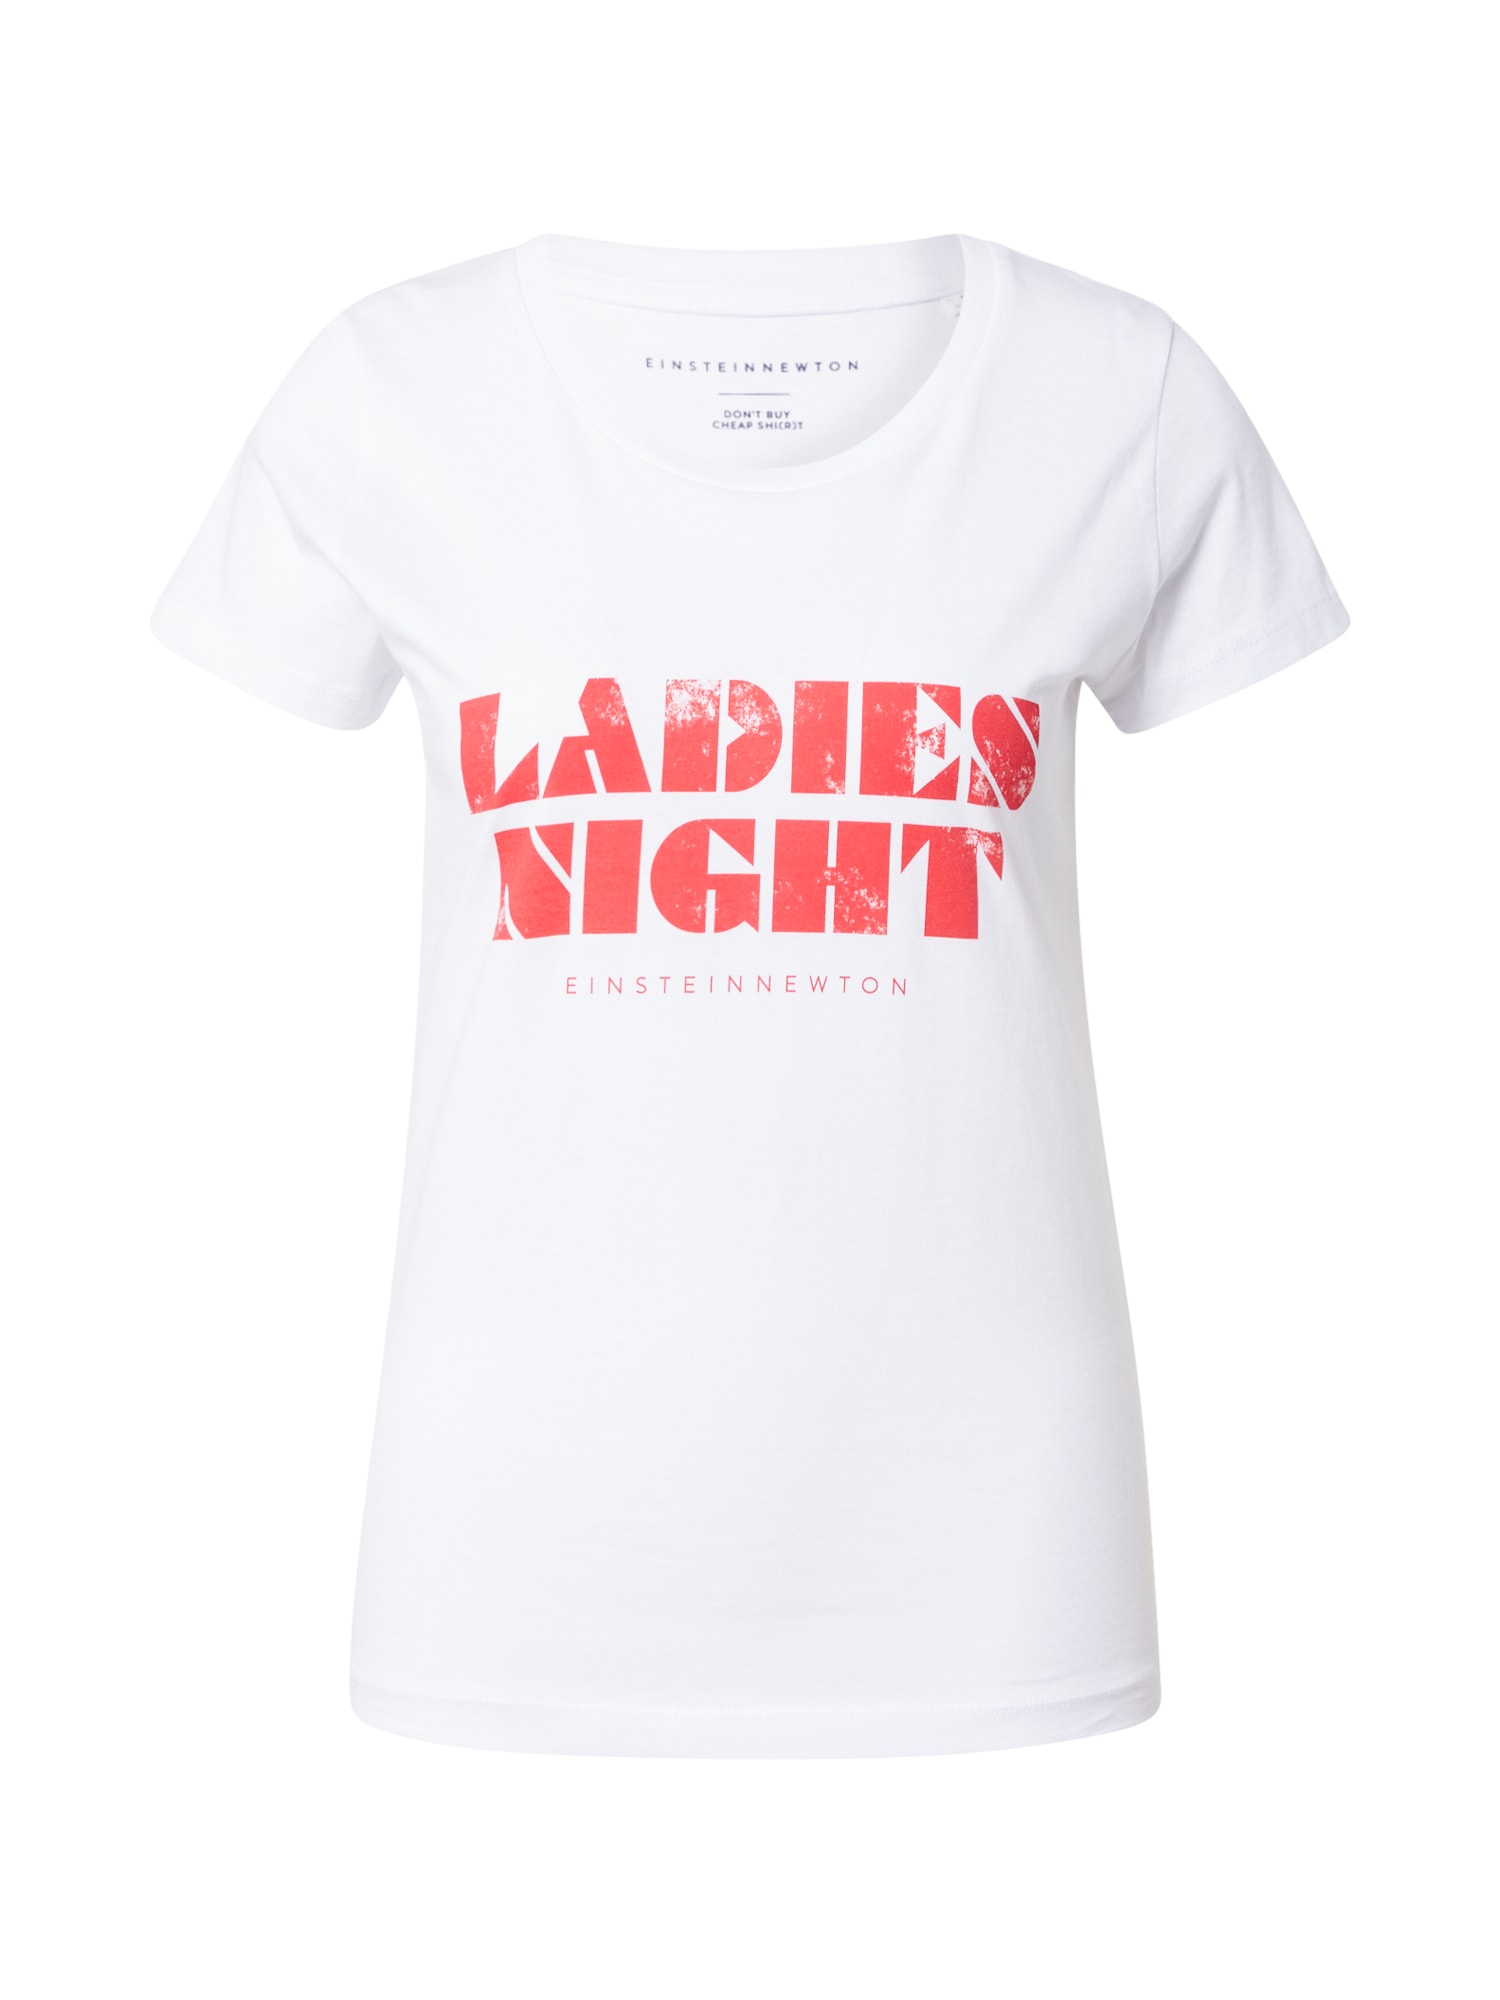 EINSTEIN & NEWTON Majica 'Ladies Night'  narančasto crvena / bijela